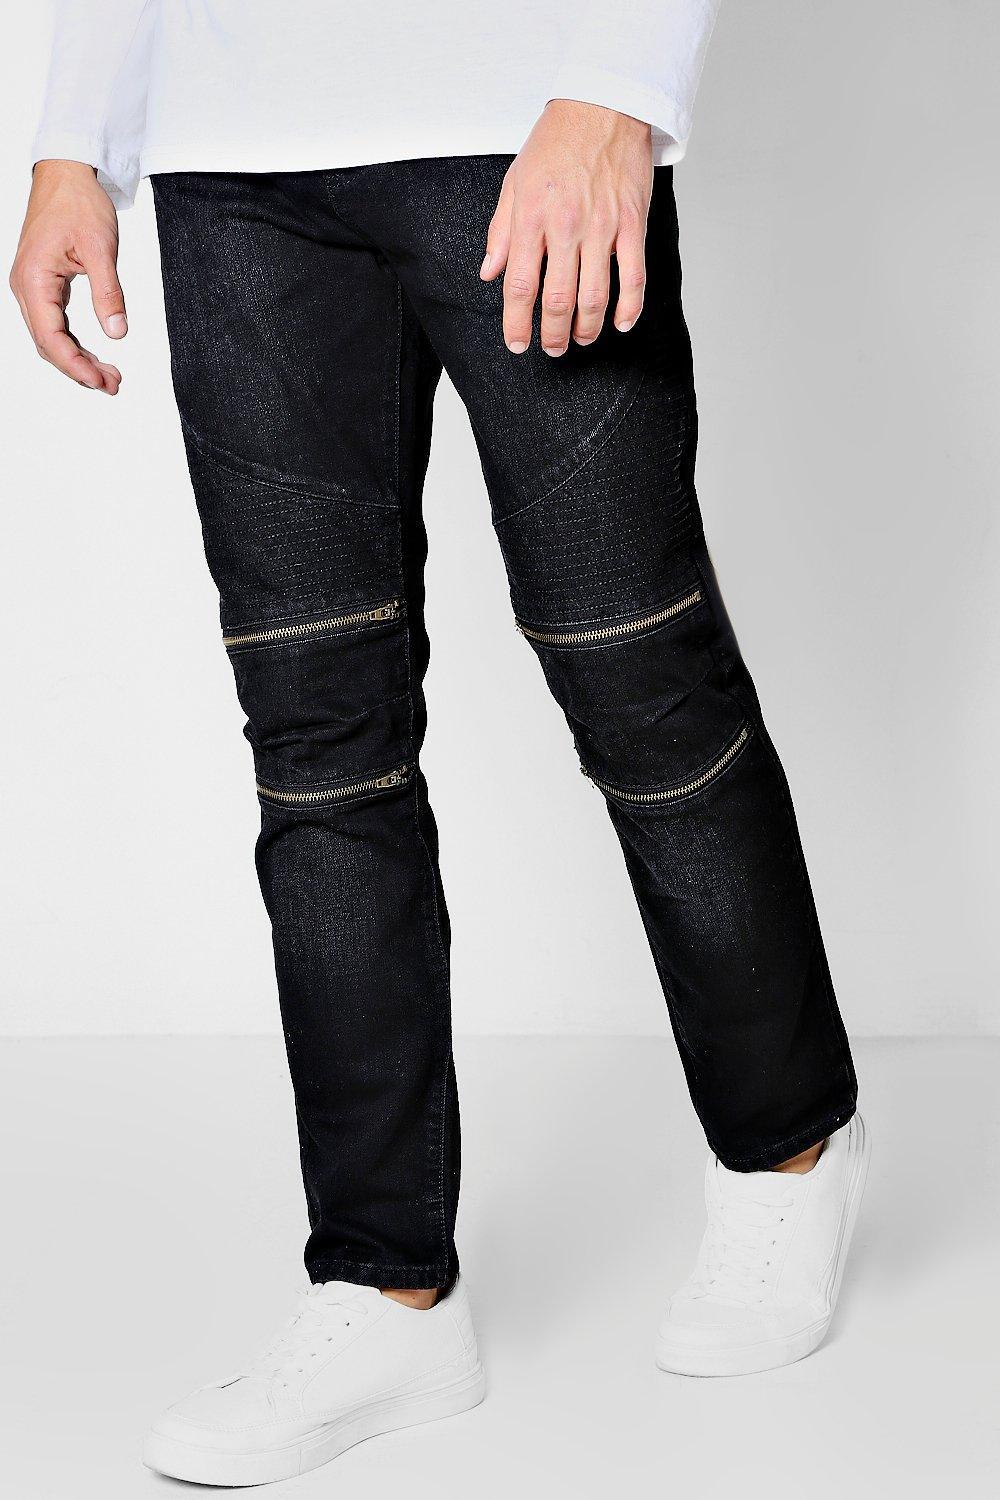 Boohoo Denim Slim Fit Zip Knee Biker Jeans for Men - Lyst